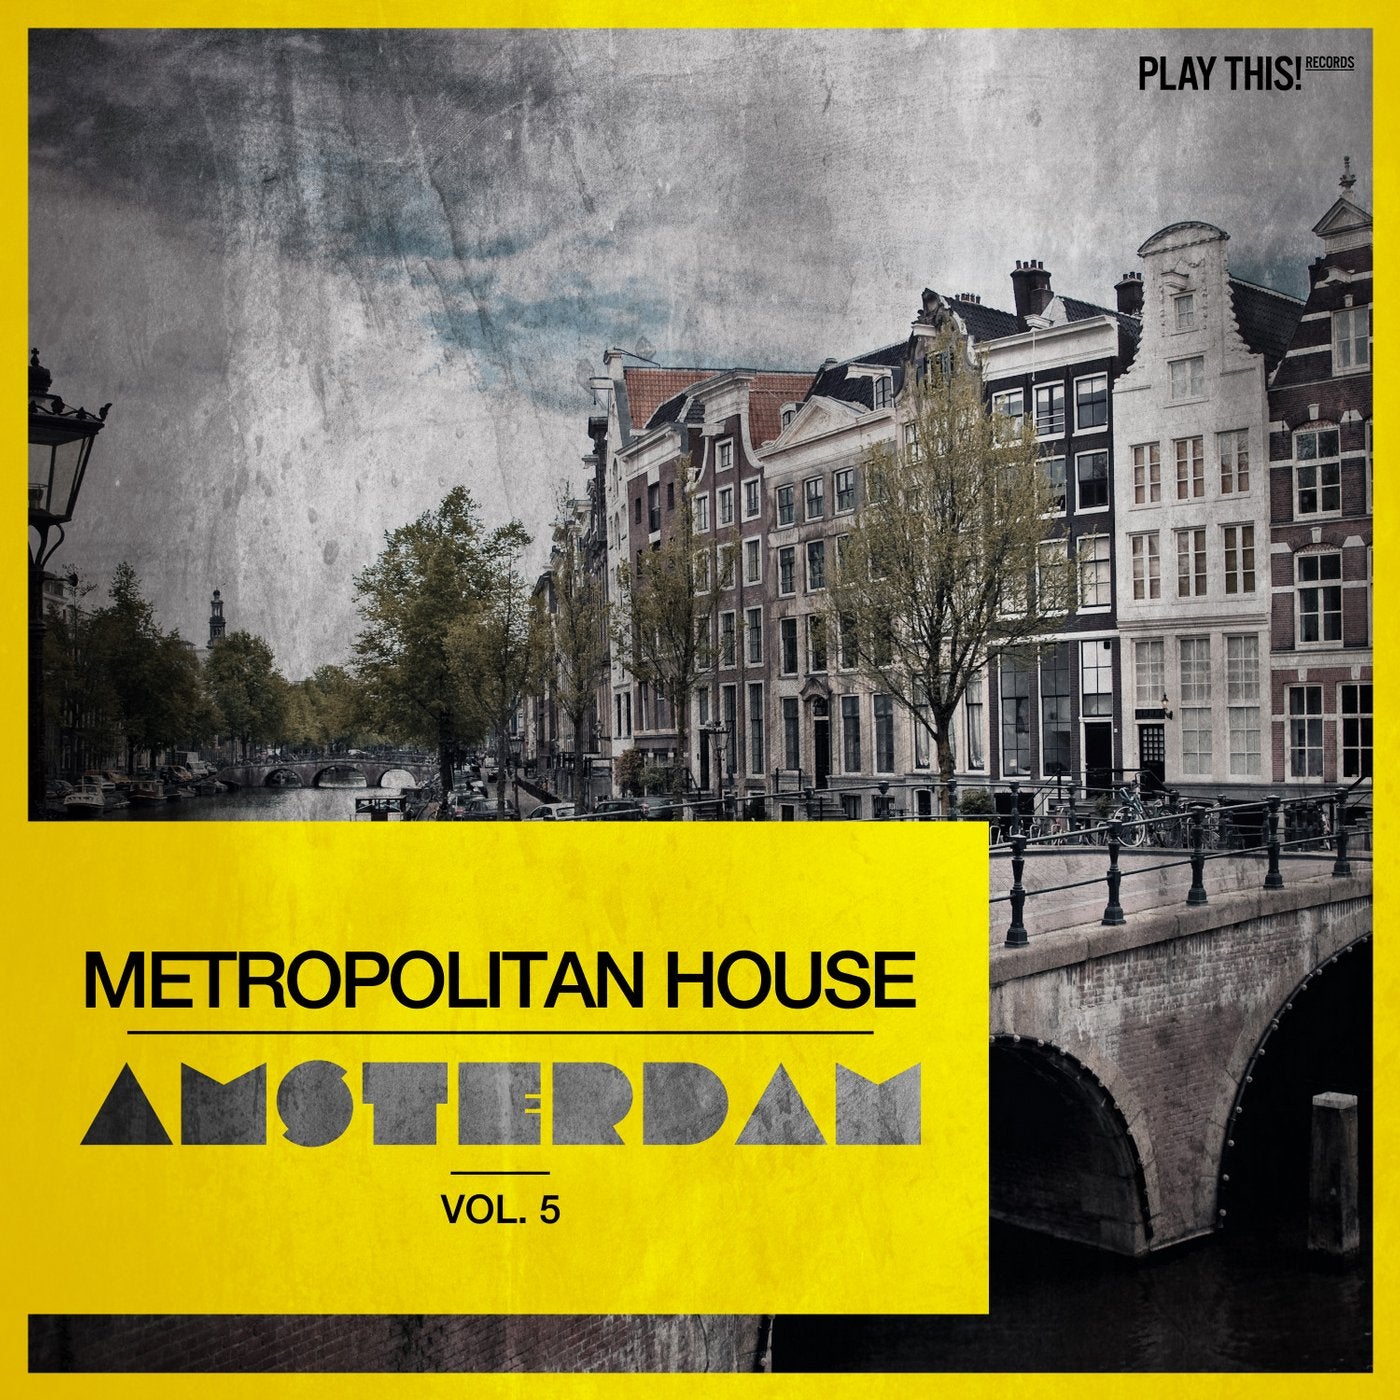 Metropolitan House: Amsterdam Vol. 5